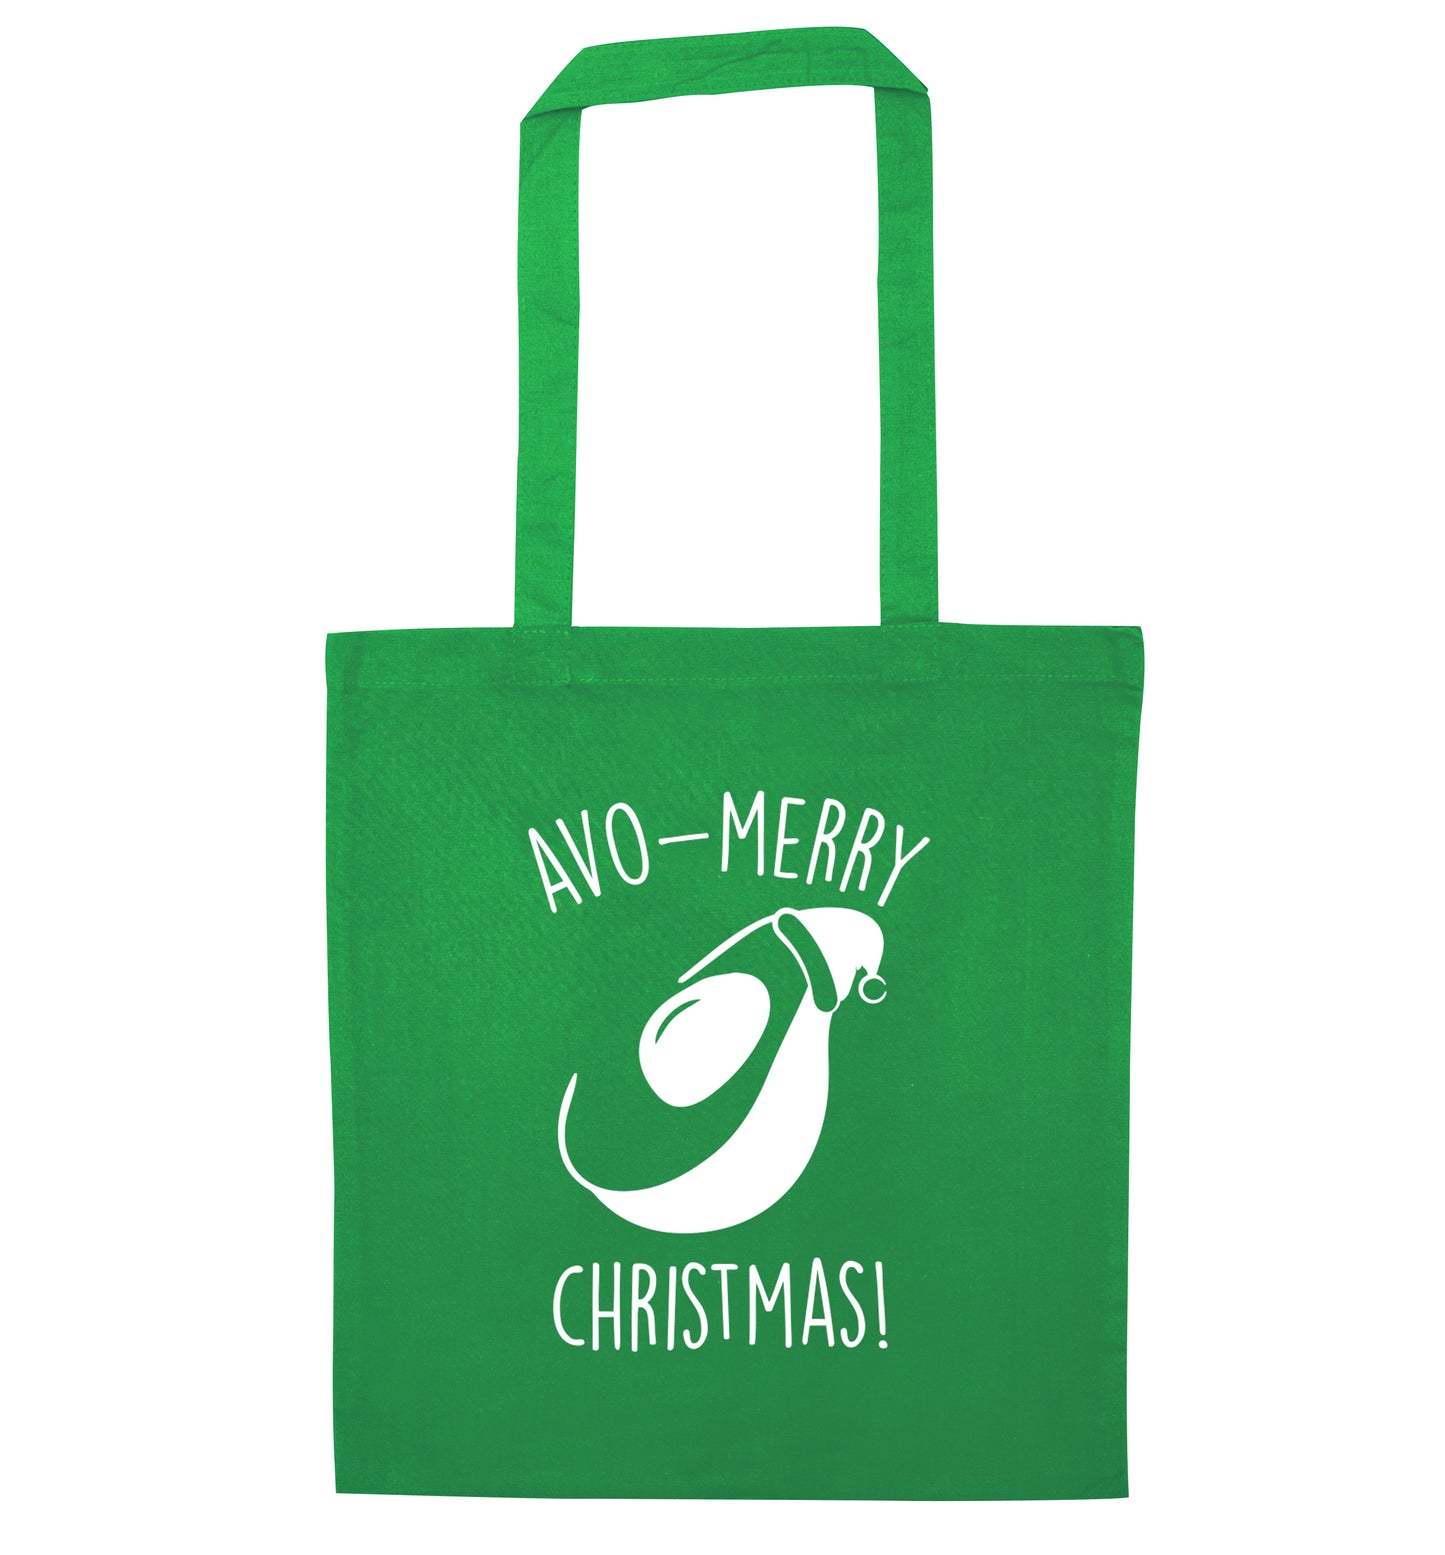 Avo-Merry Christmas green tote bag